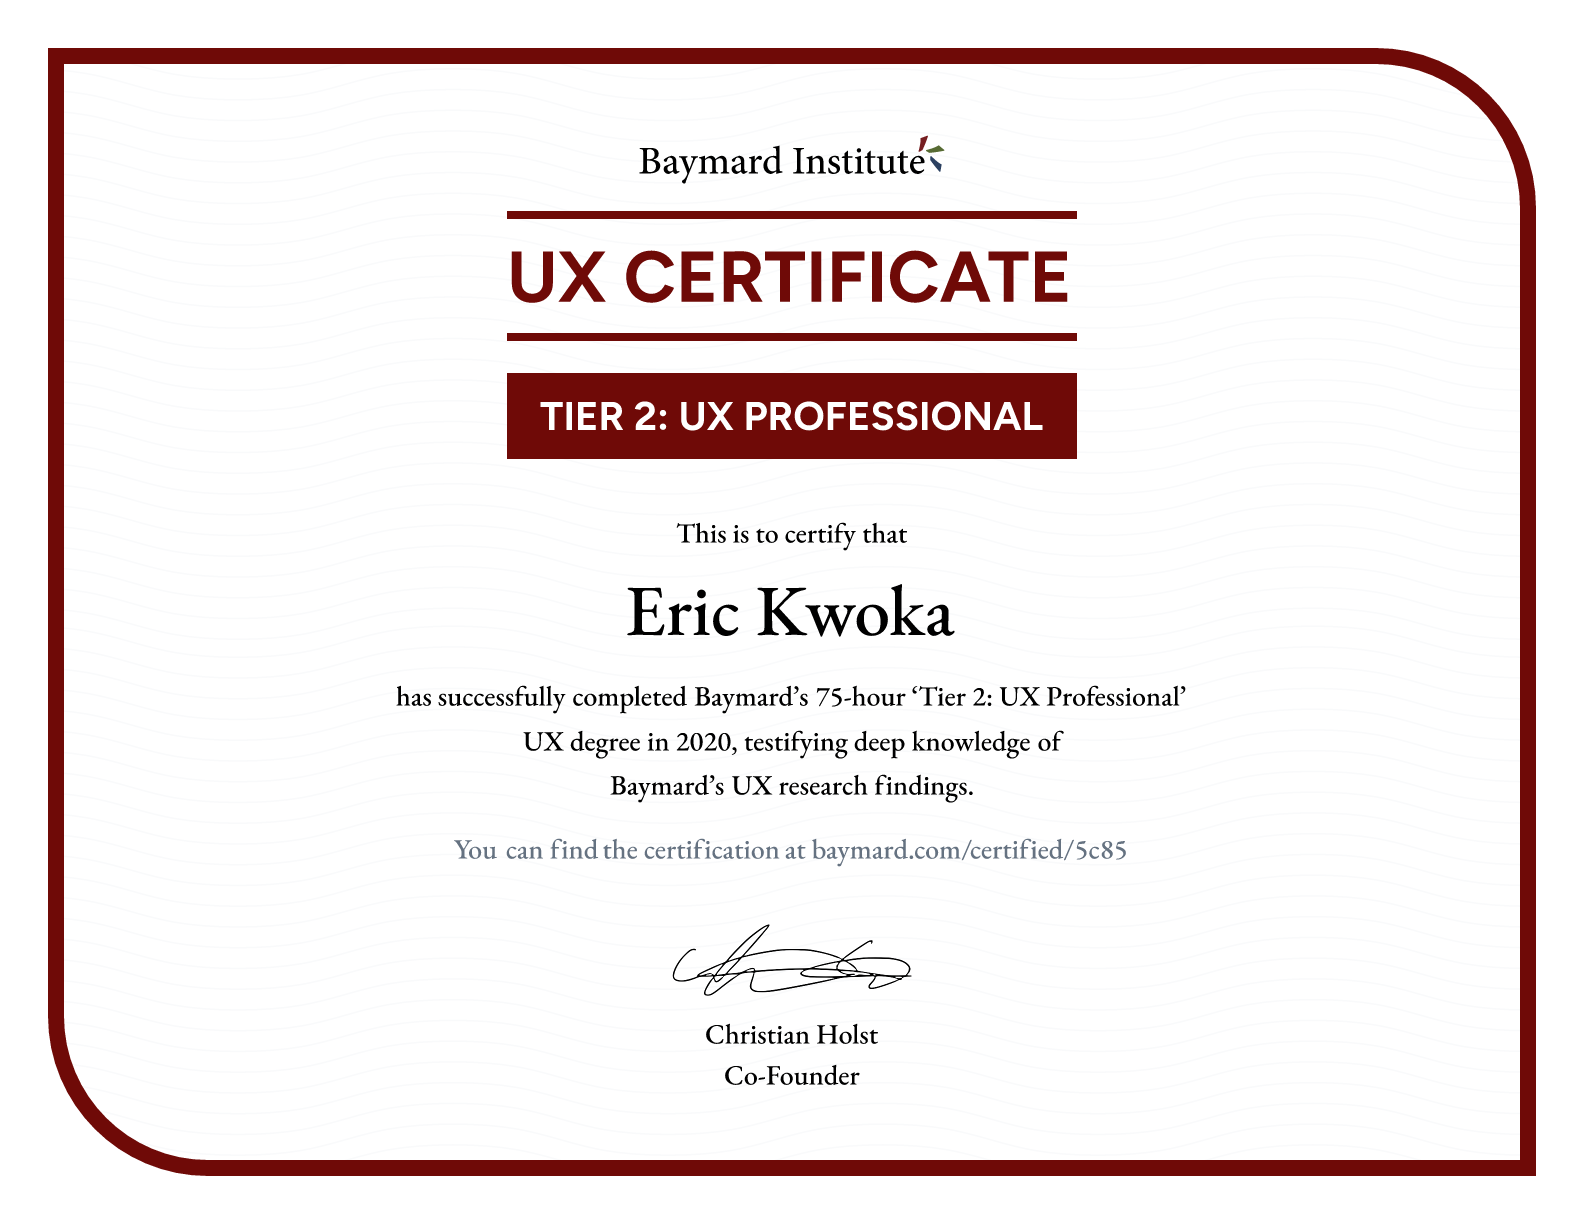 Eric Kwoka’s certificate